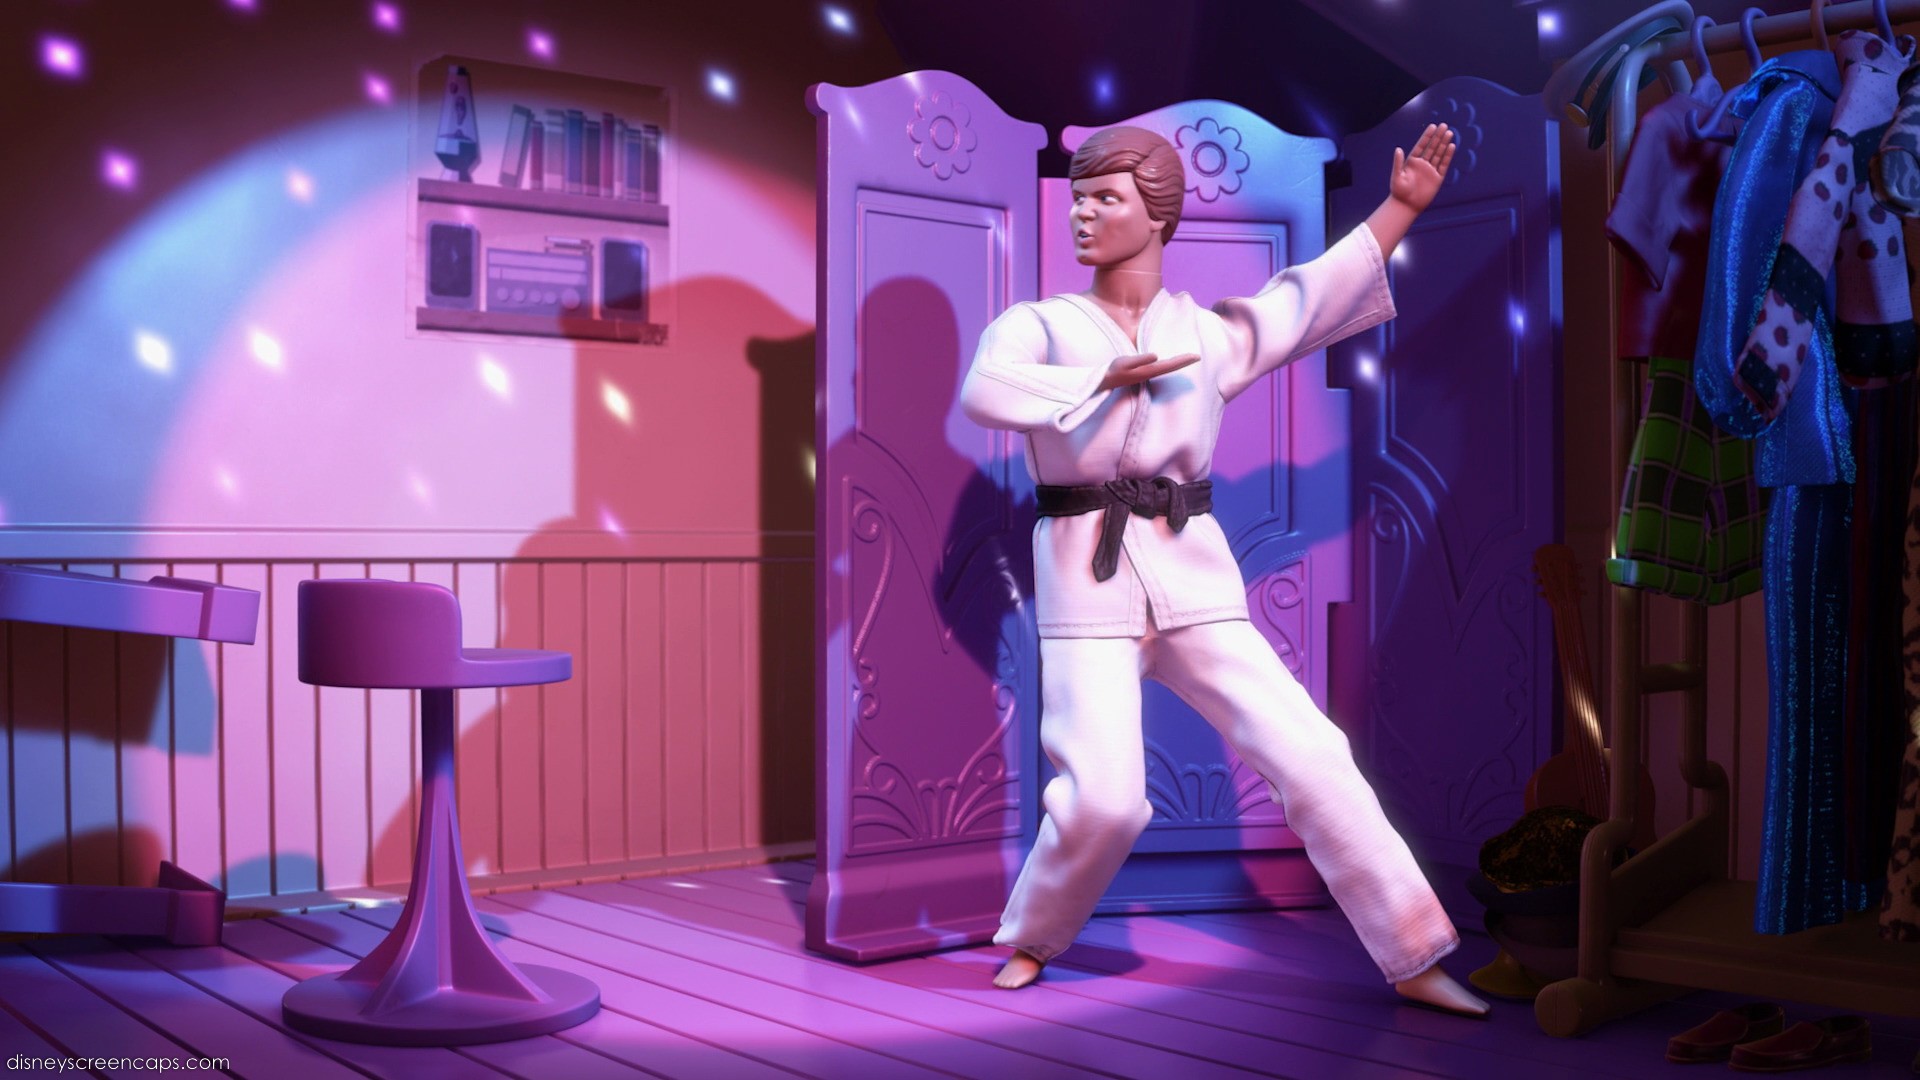 Ken in Taekwondo Suit